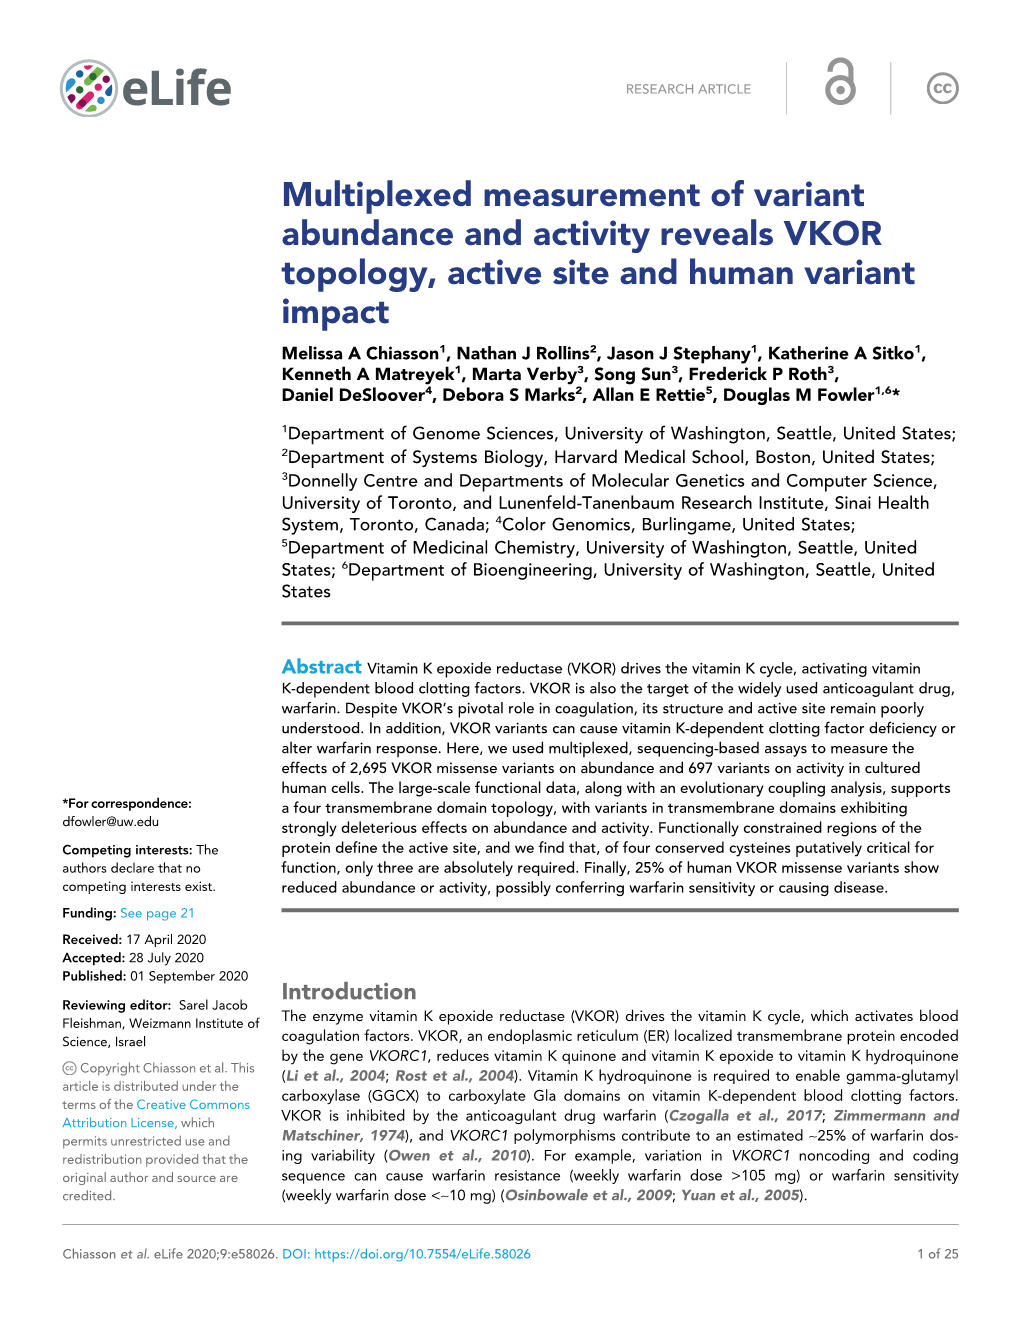 Multiplexed Measurement of Variant Abundance and Activity Reveals